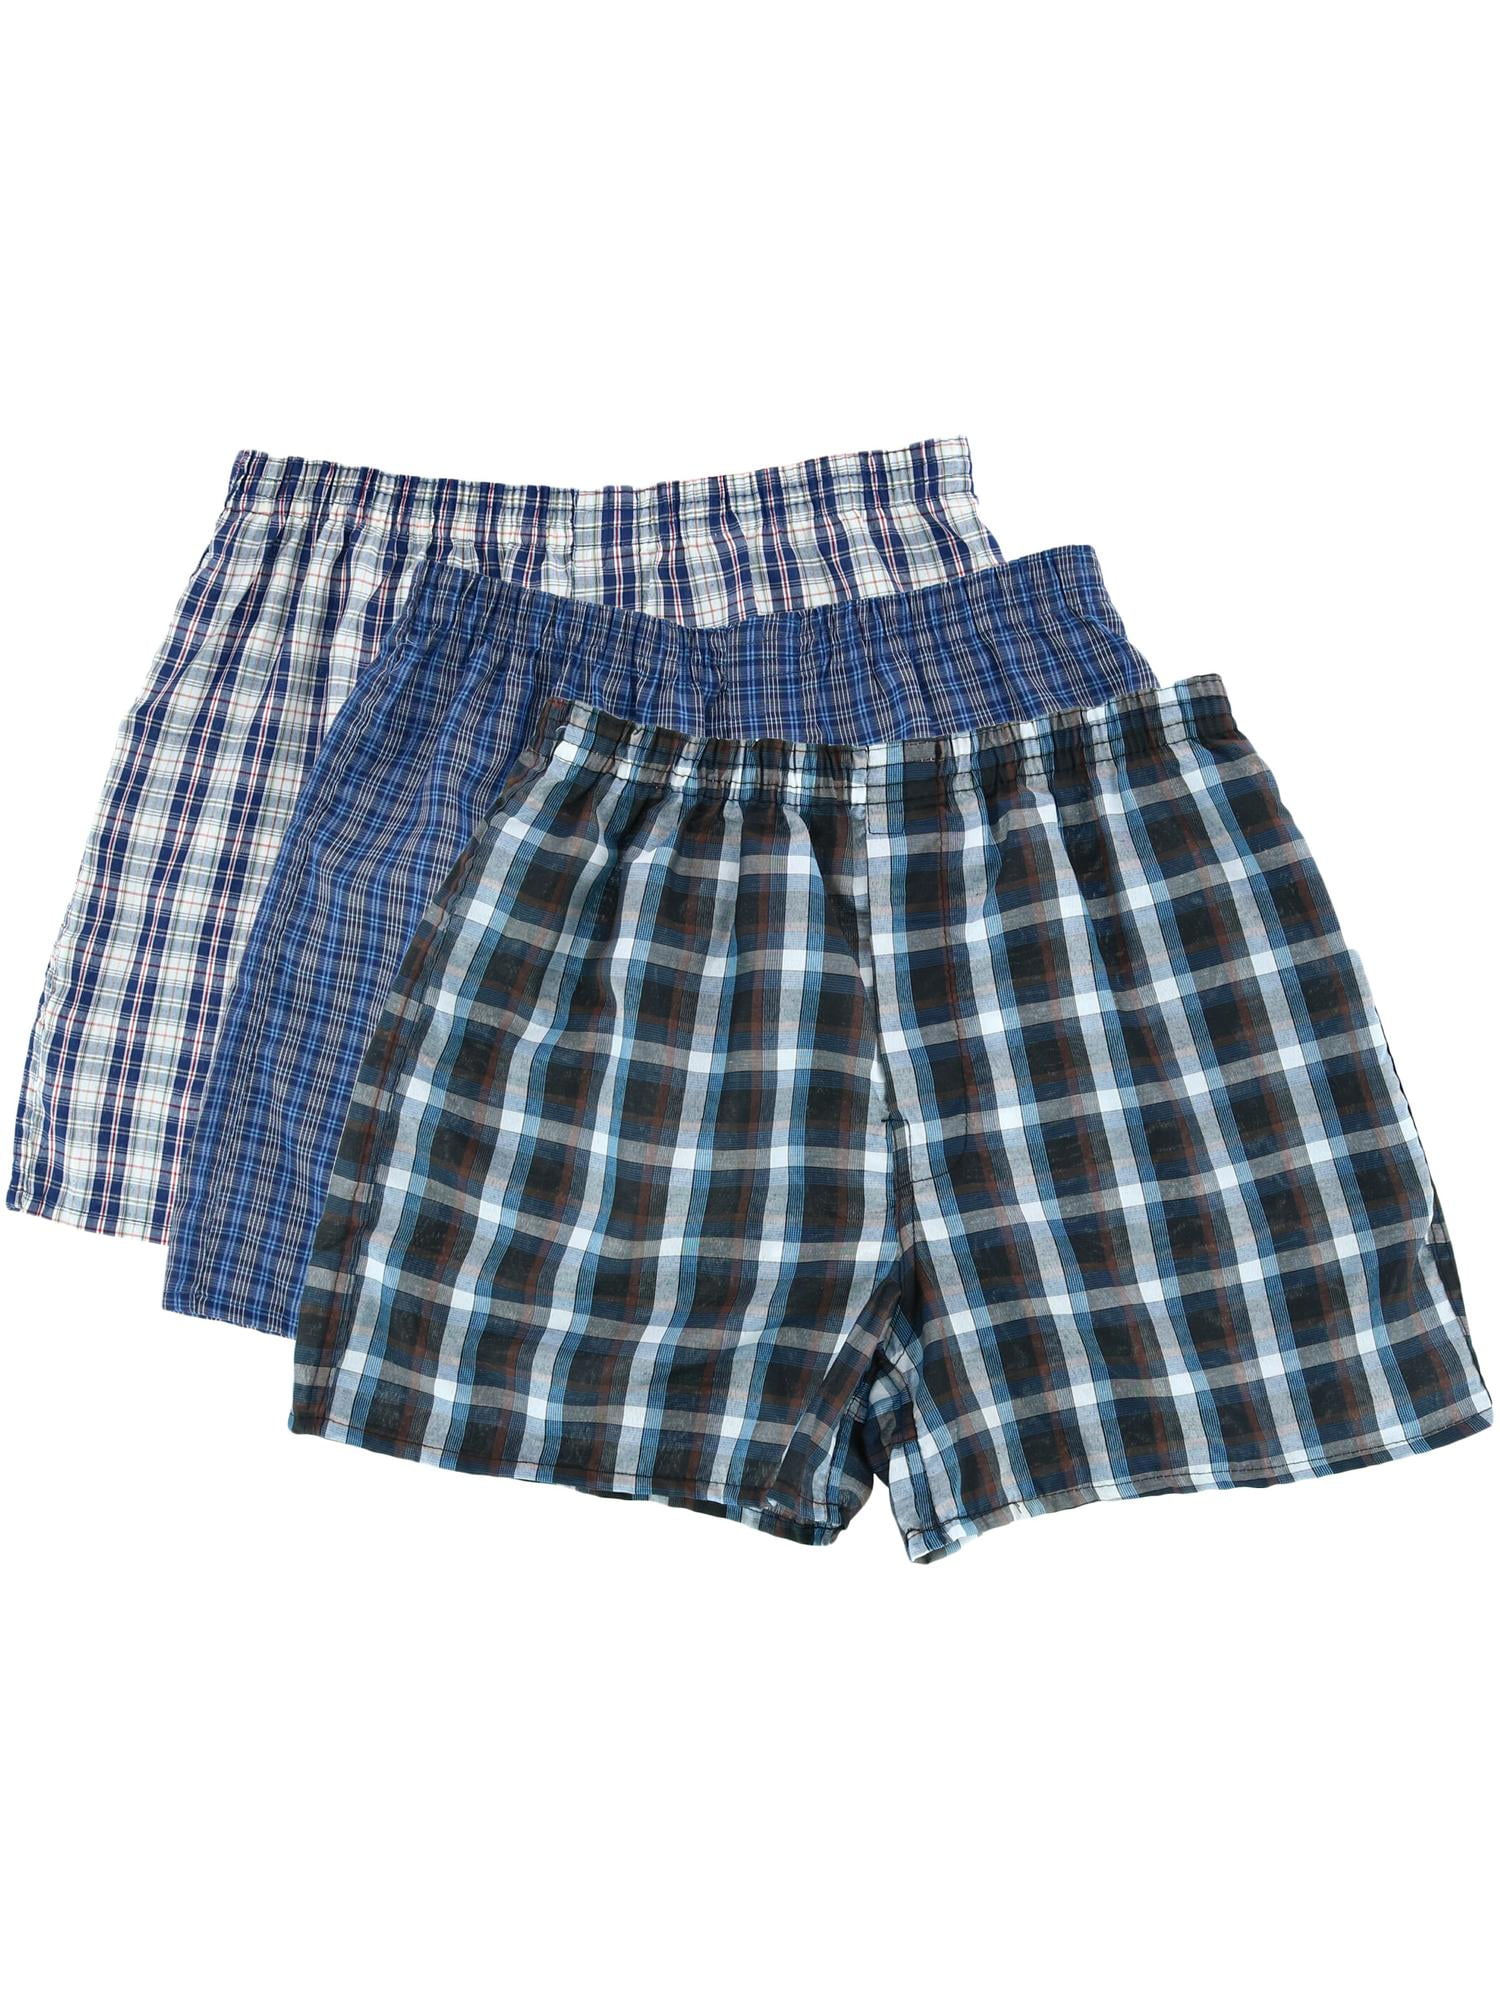 Power Club Boxer Shorts (3 Pack) (Men) - Walmart.com